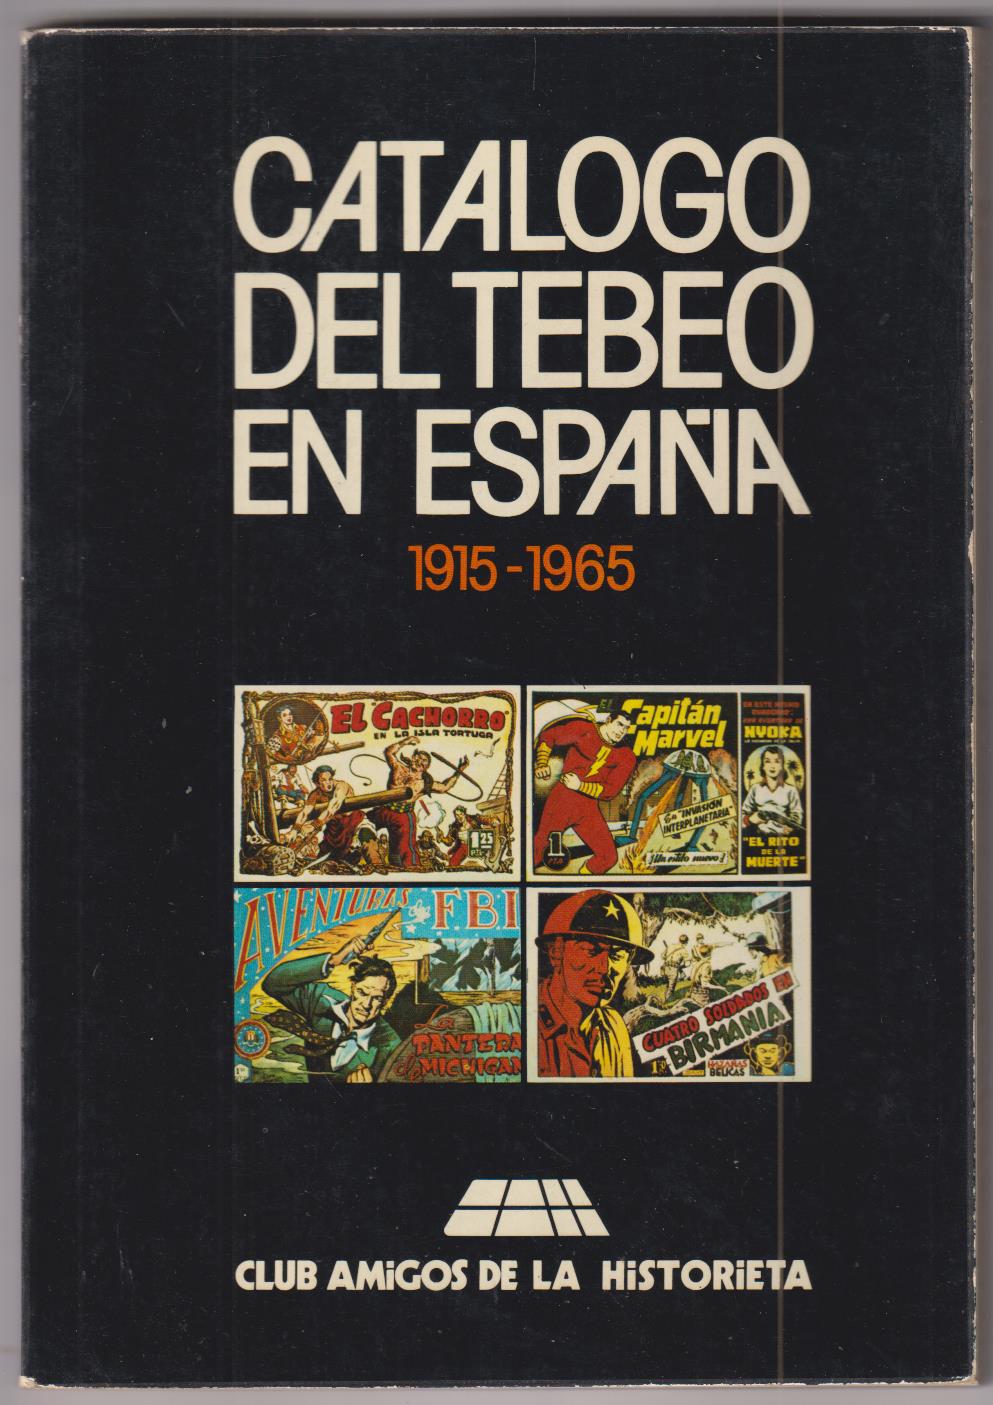 Catálogo del Tebeo en España 1915-1965. J.M.Delhom, 1980. SIN USAR